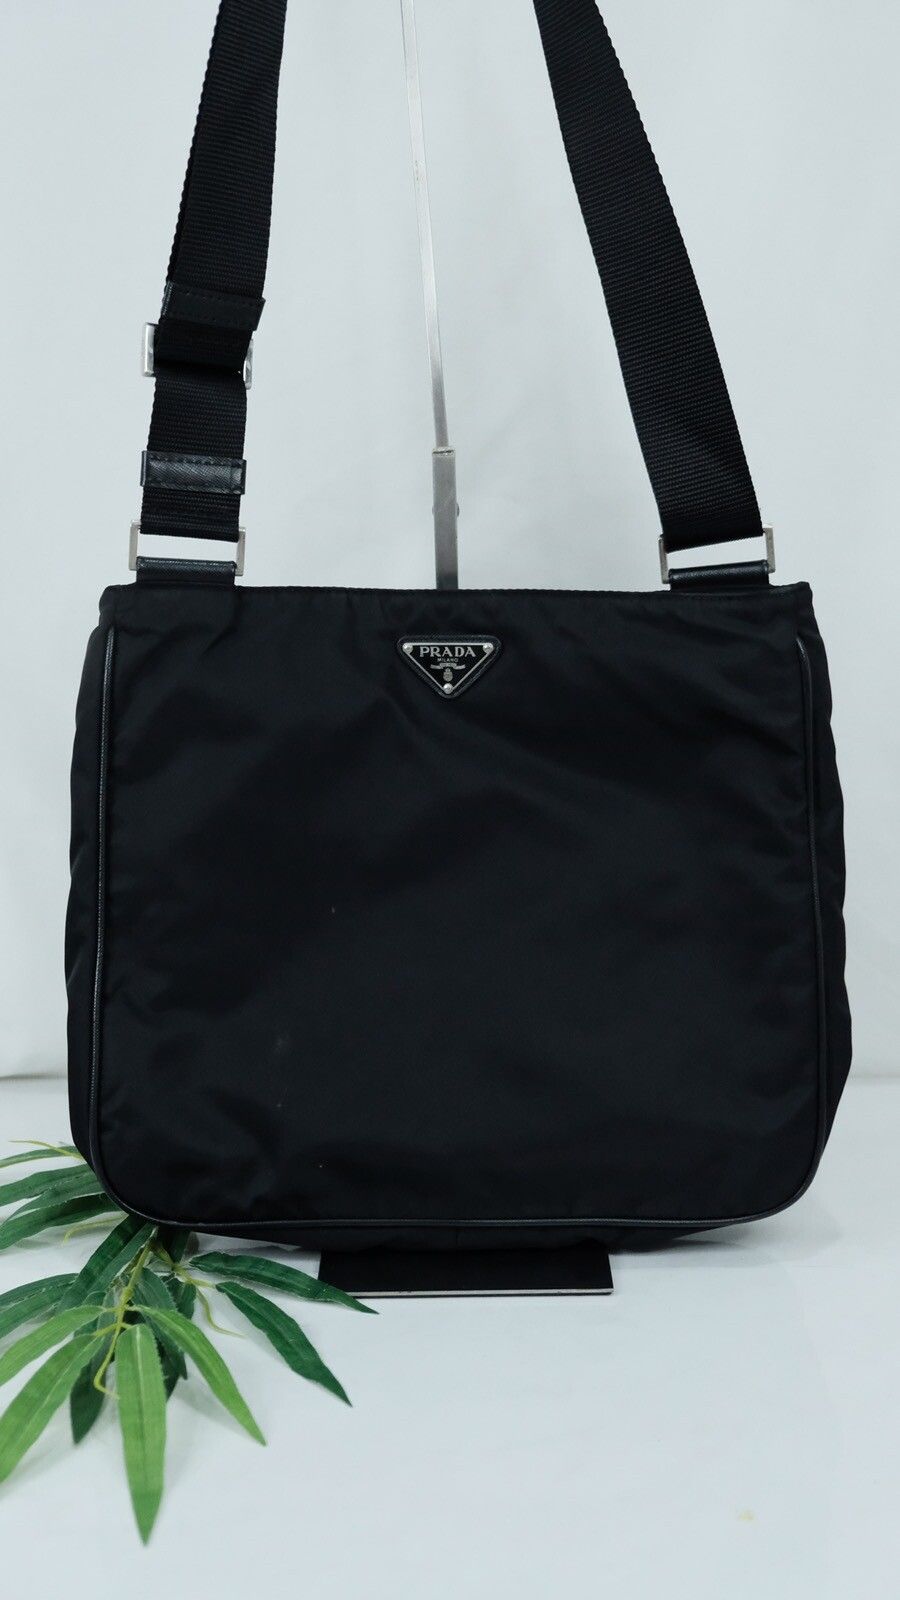 Authentic prada sling bag black nylon - 3